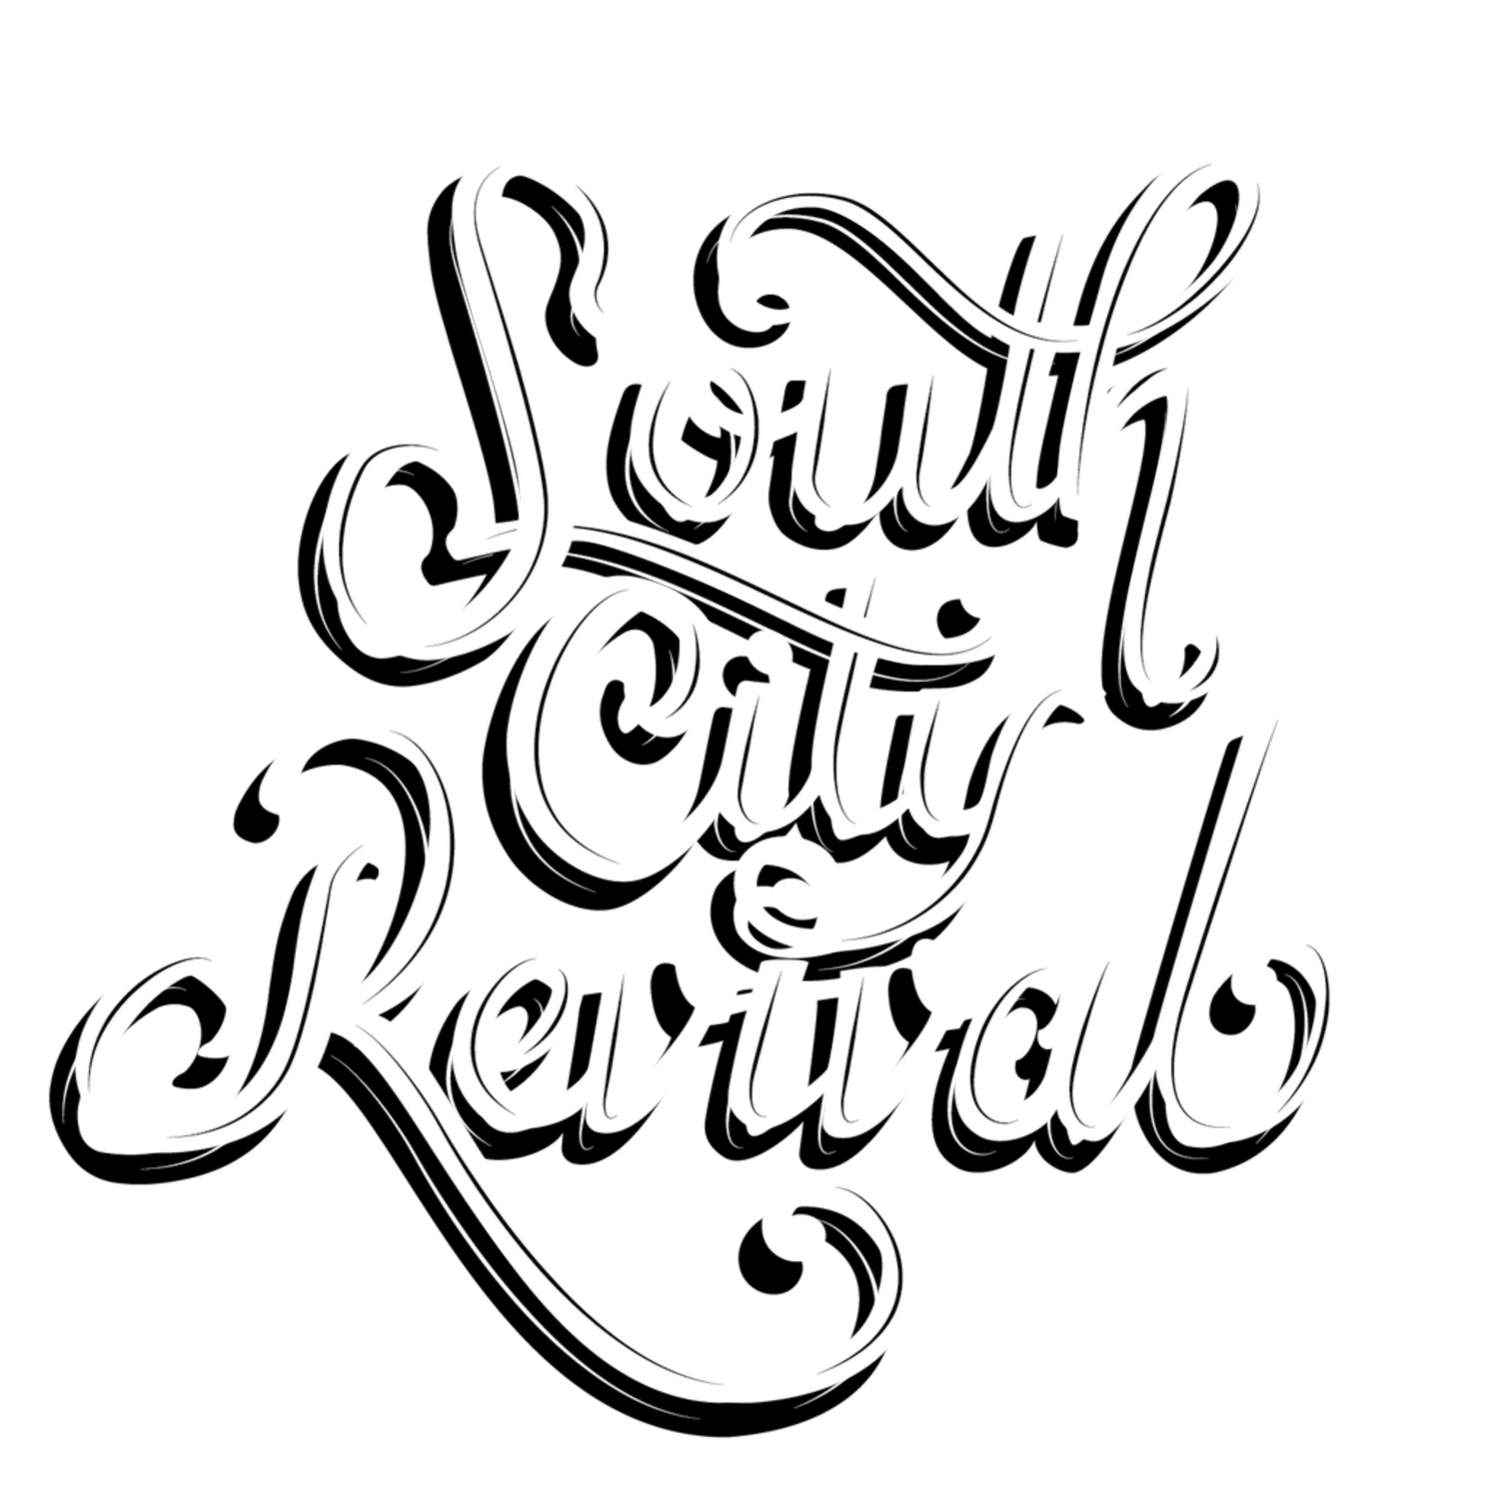 South City Revival